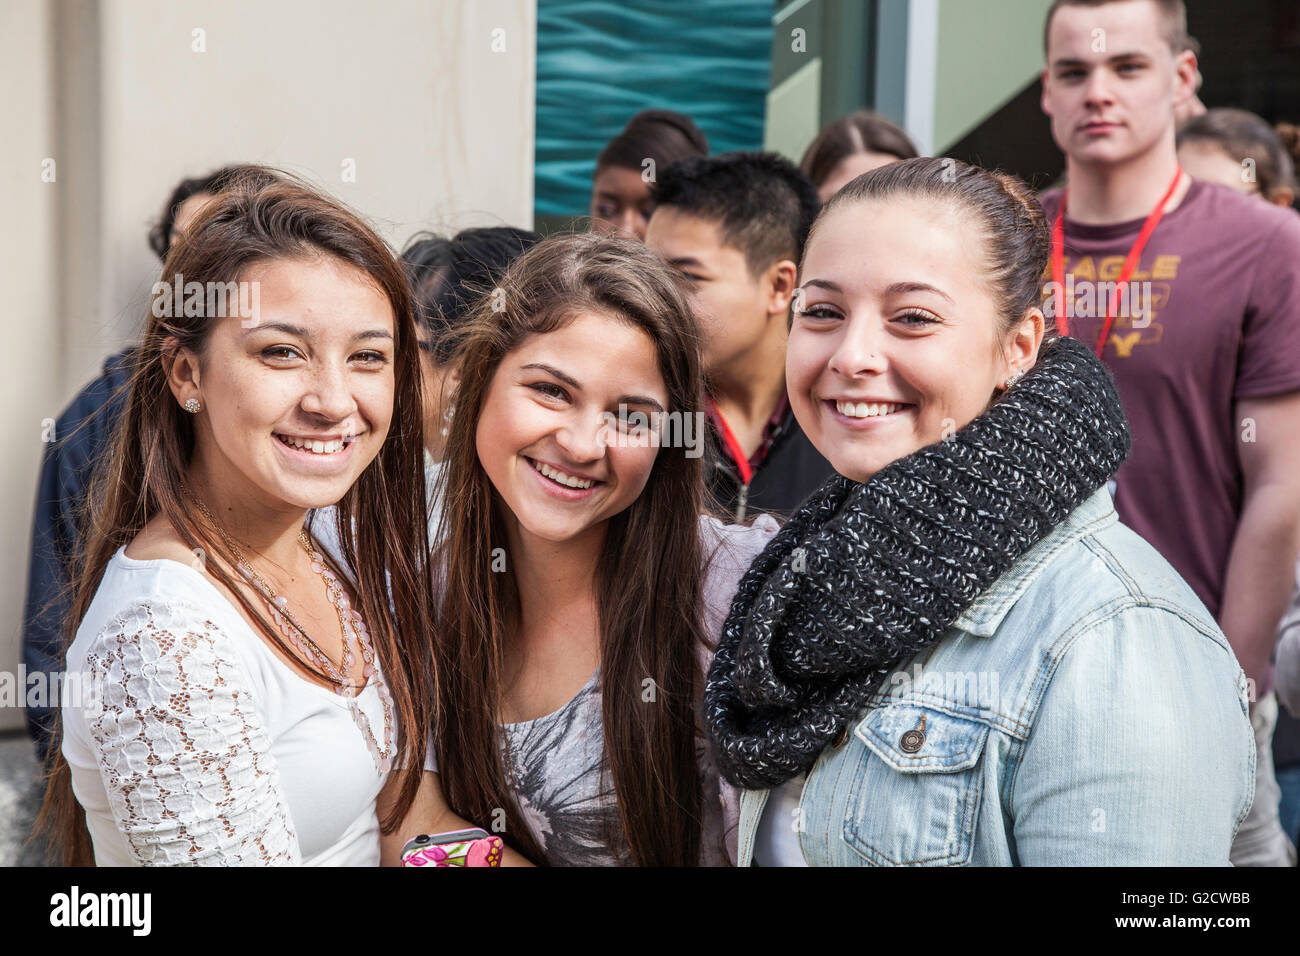 Three smiling high school girls Stock Photo